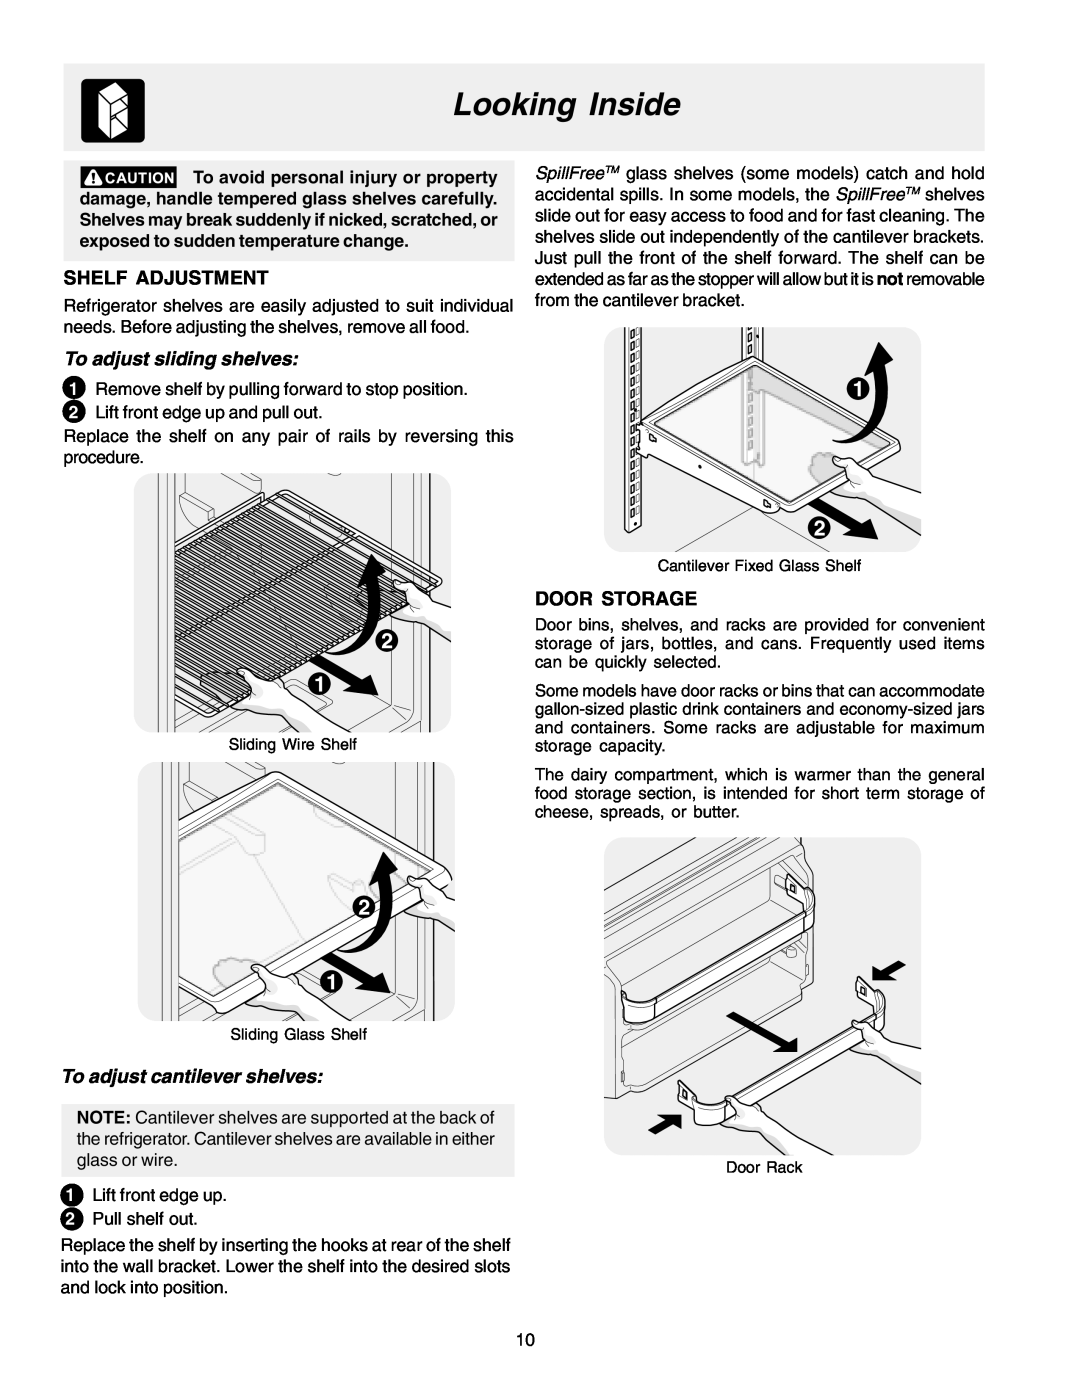 Frigidaire Frigidaire manual Looking Inside, Shelf Adjustment, To adjust sliding shelves, Door Storage 